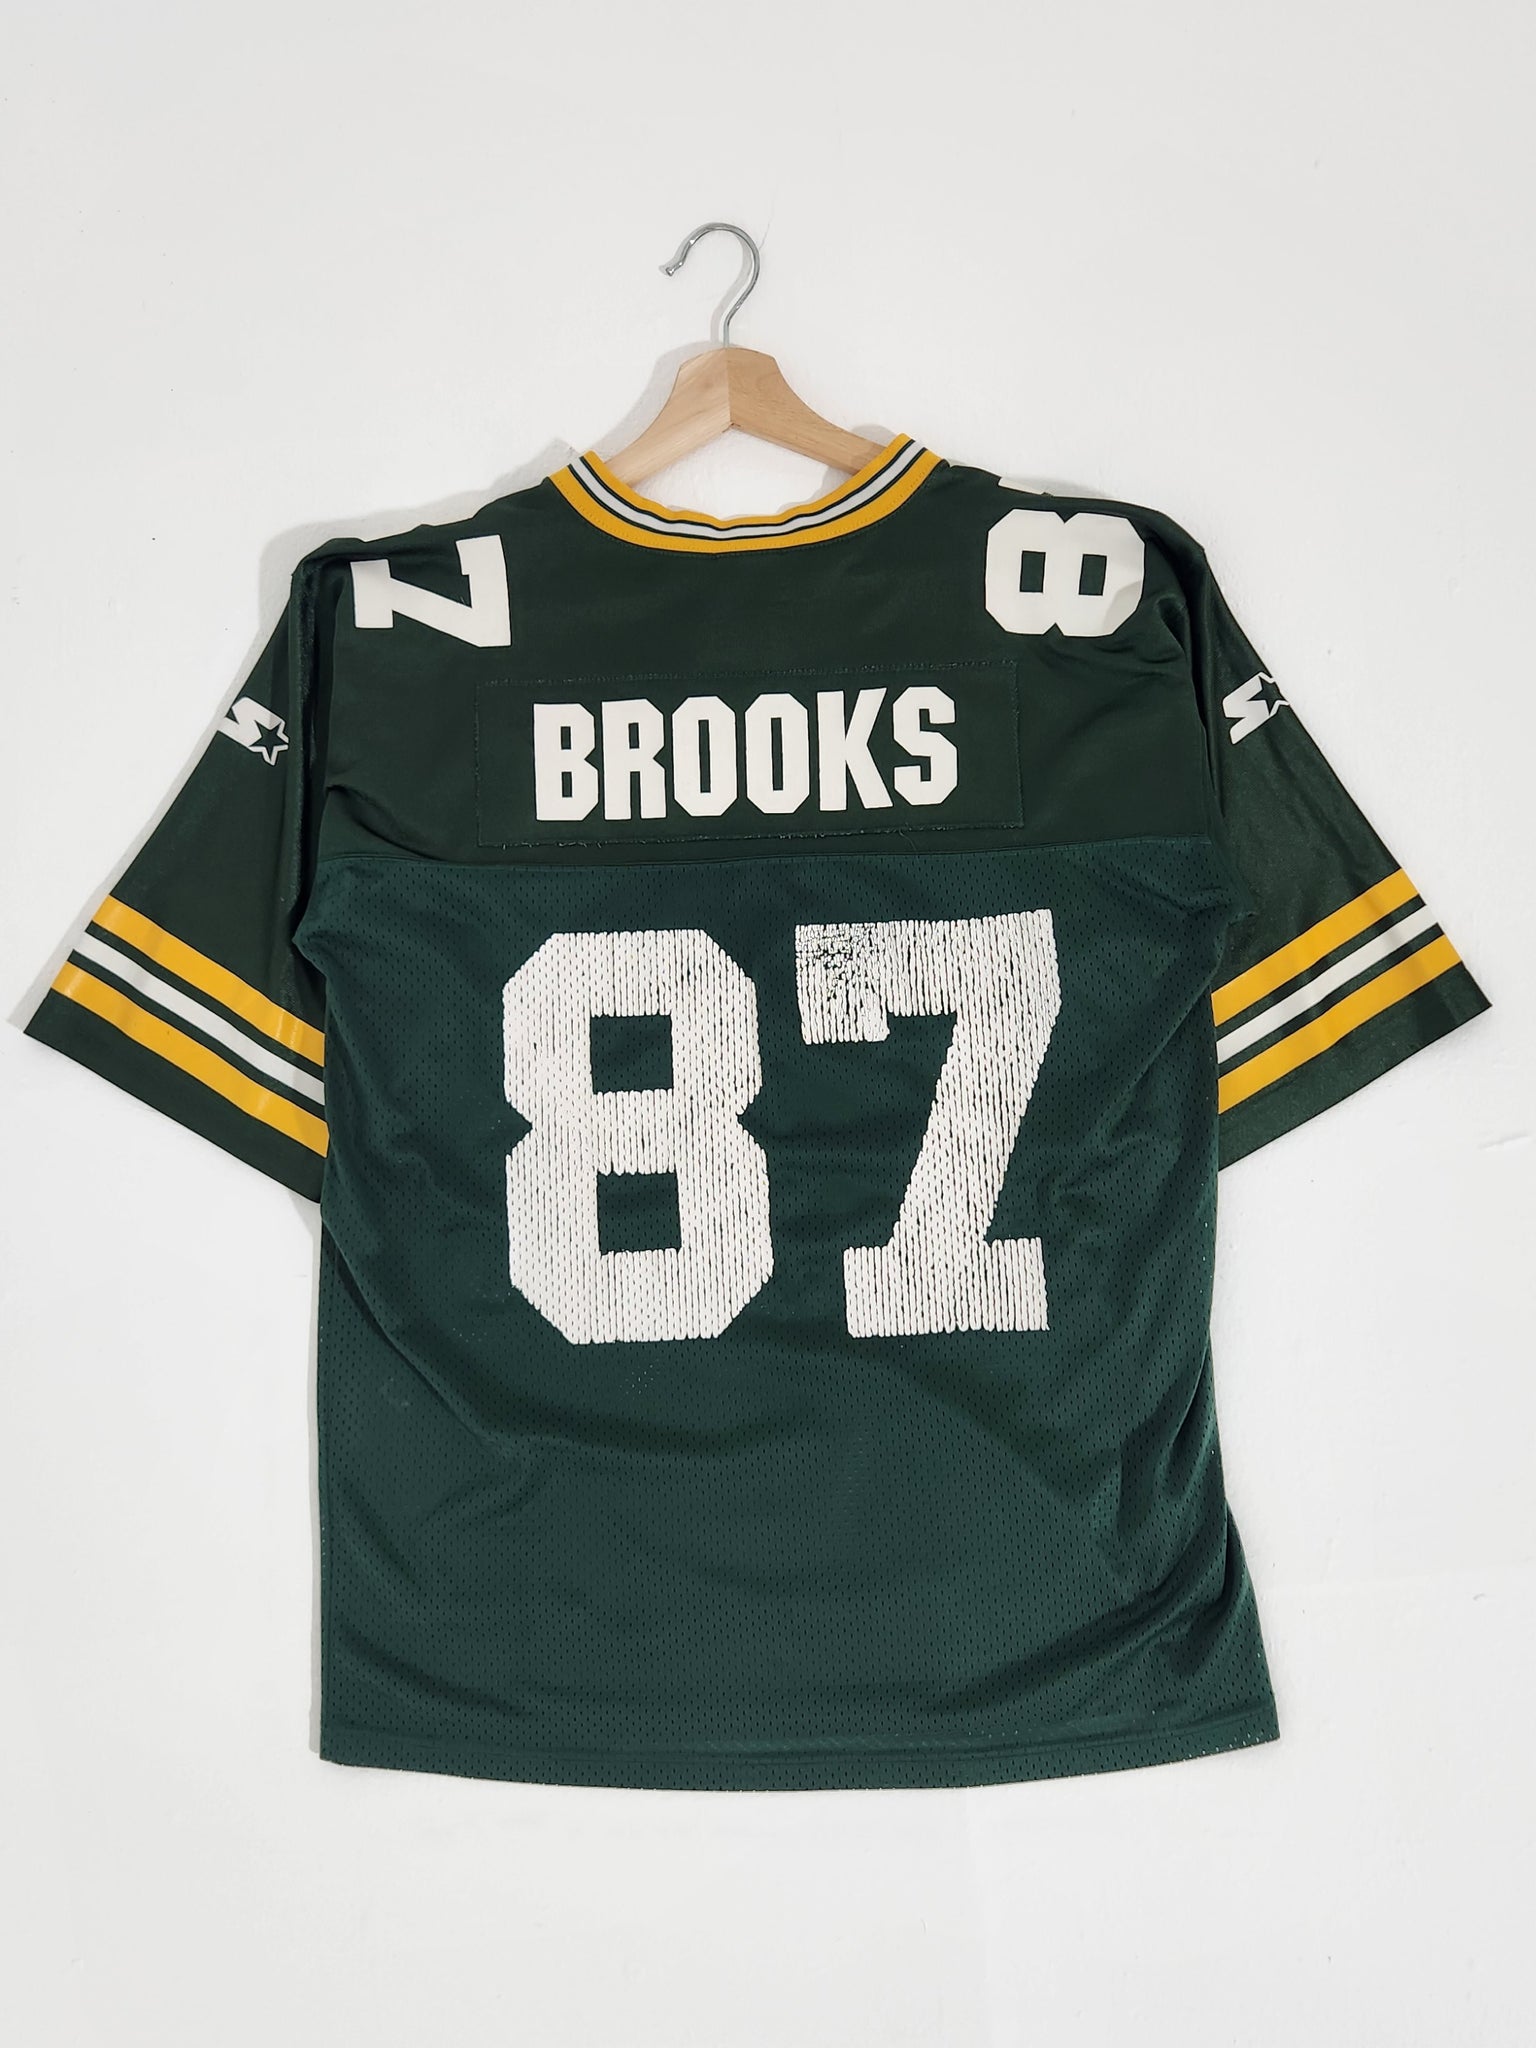 Bob Brooks replica jersey